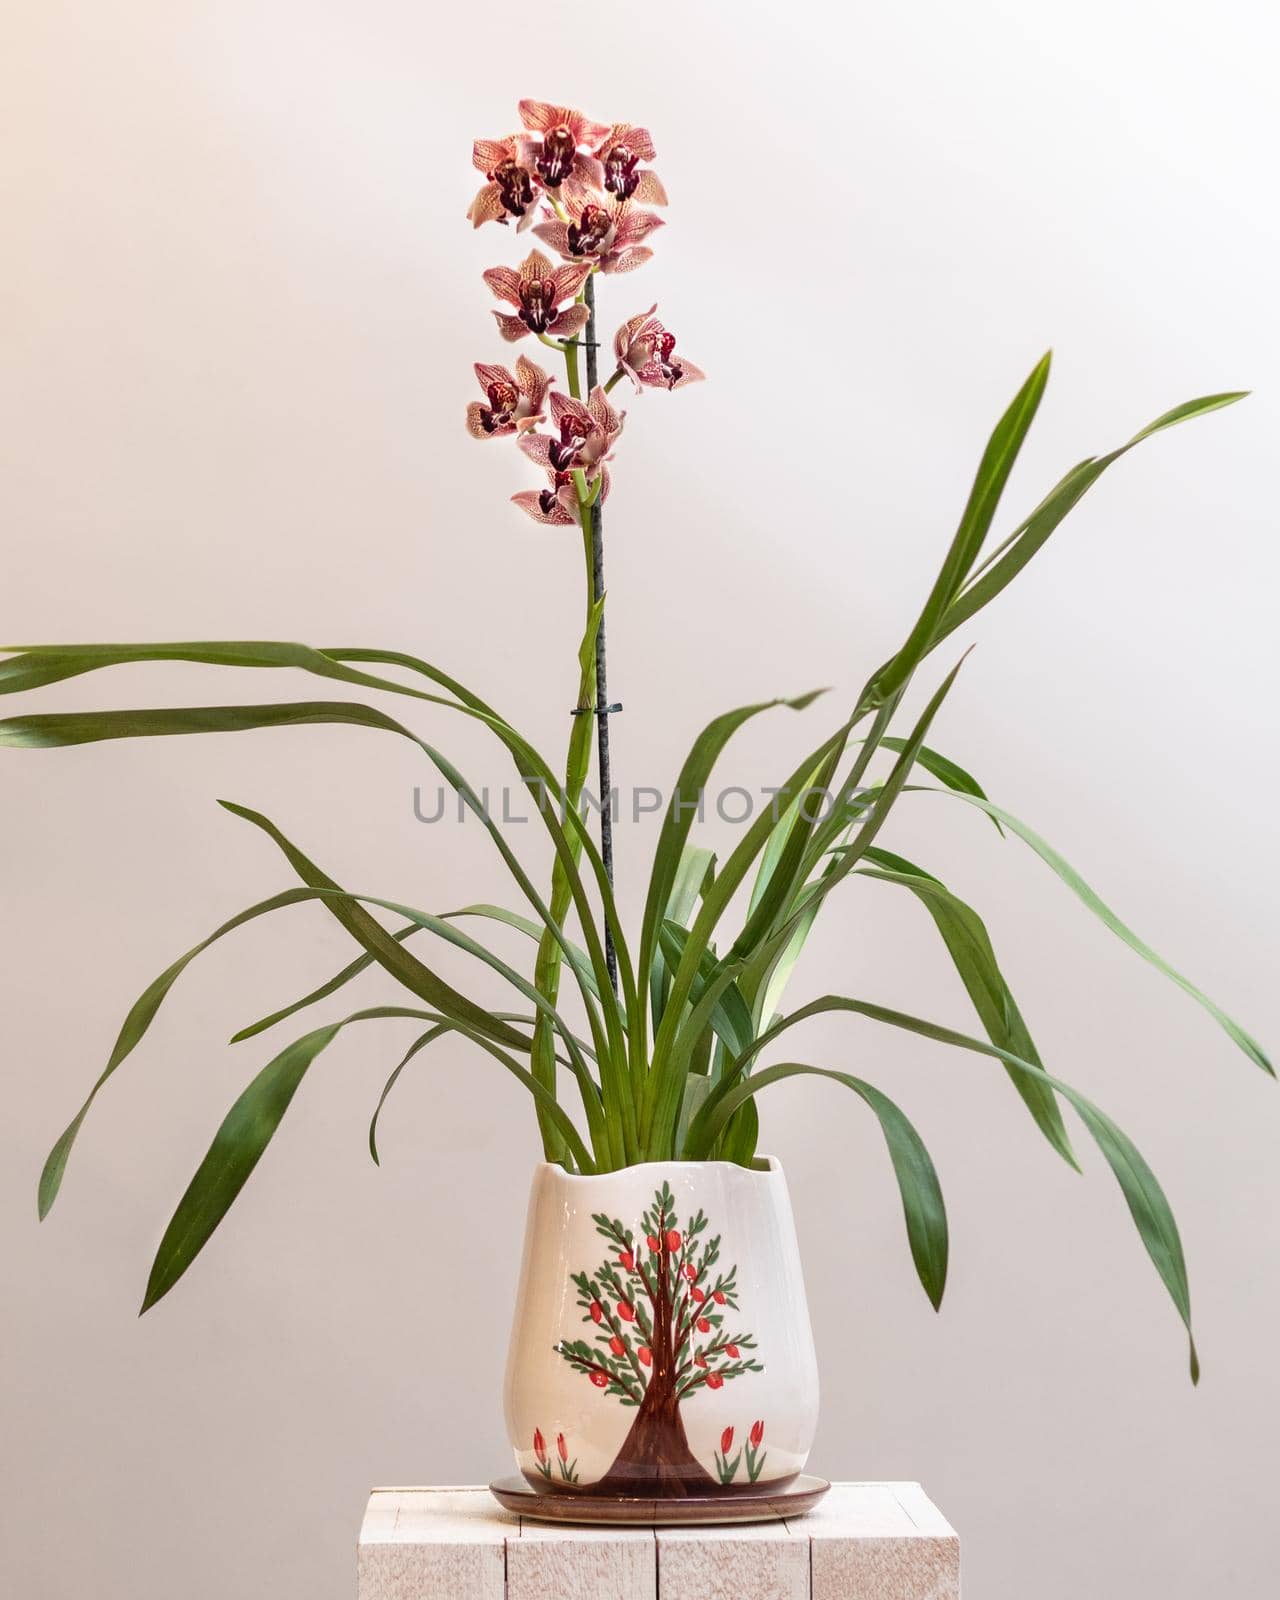 Boat orchid, cymbidium in the pot by ferhad